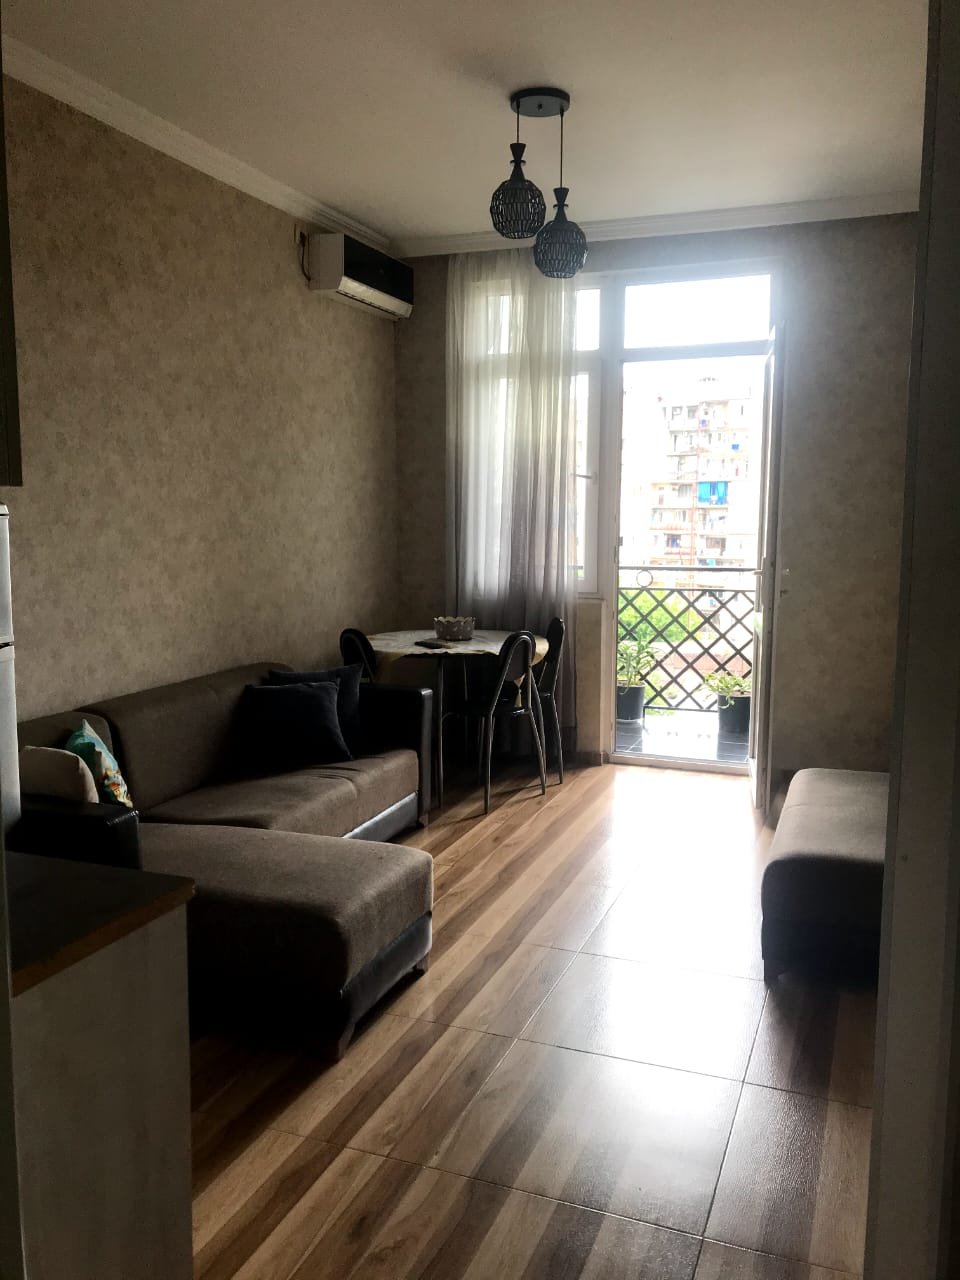 1-bedroom apartment on a street of Gorgasali id-1042 -  rent an apartment in Batumi